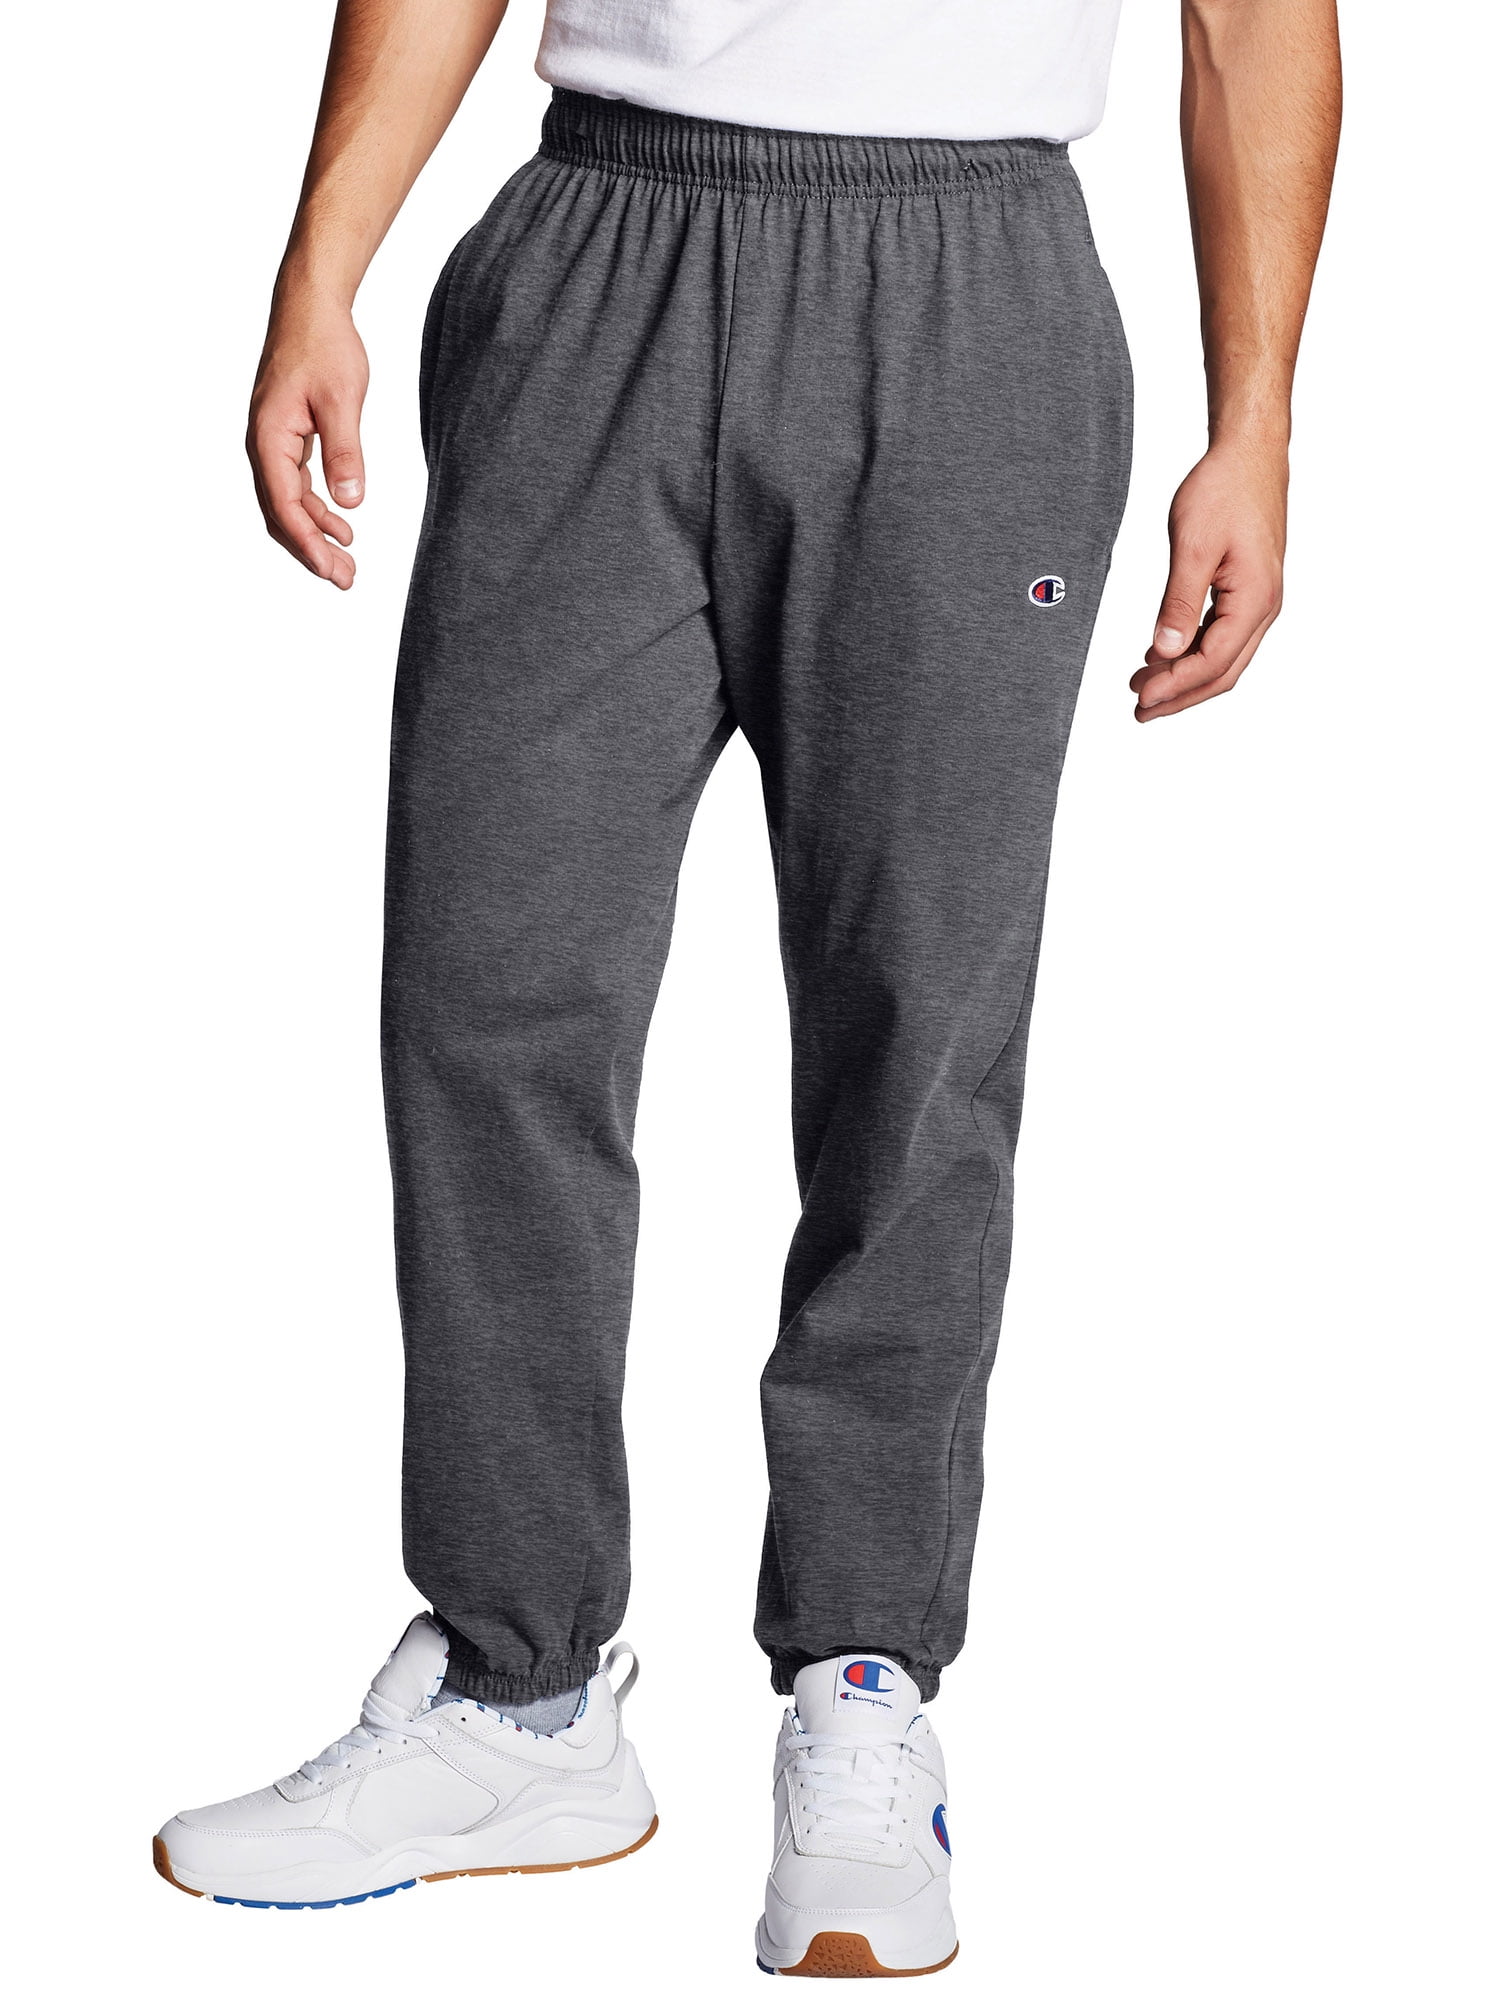 Men's Champion Brand Authentic Athletic Wear Sweatpants Grey Size Medium